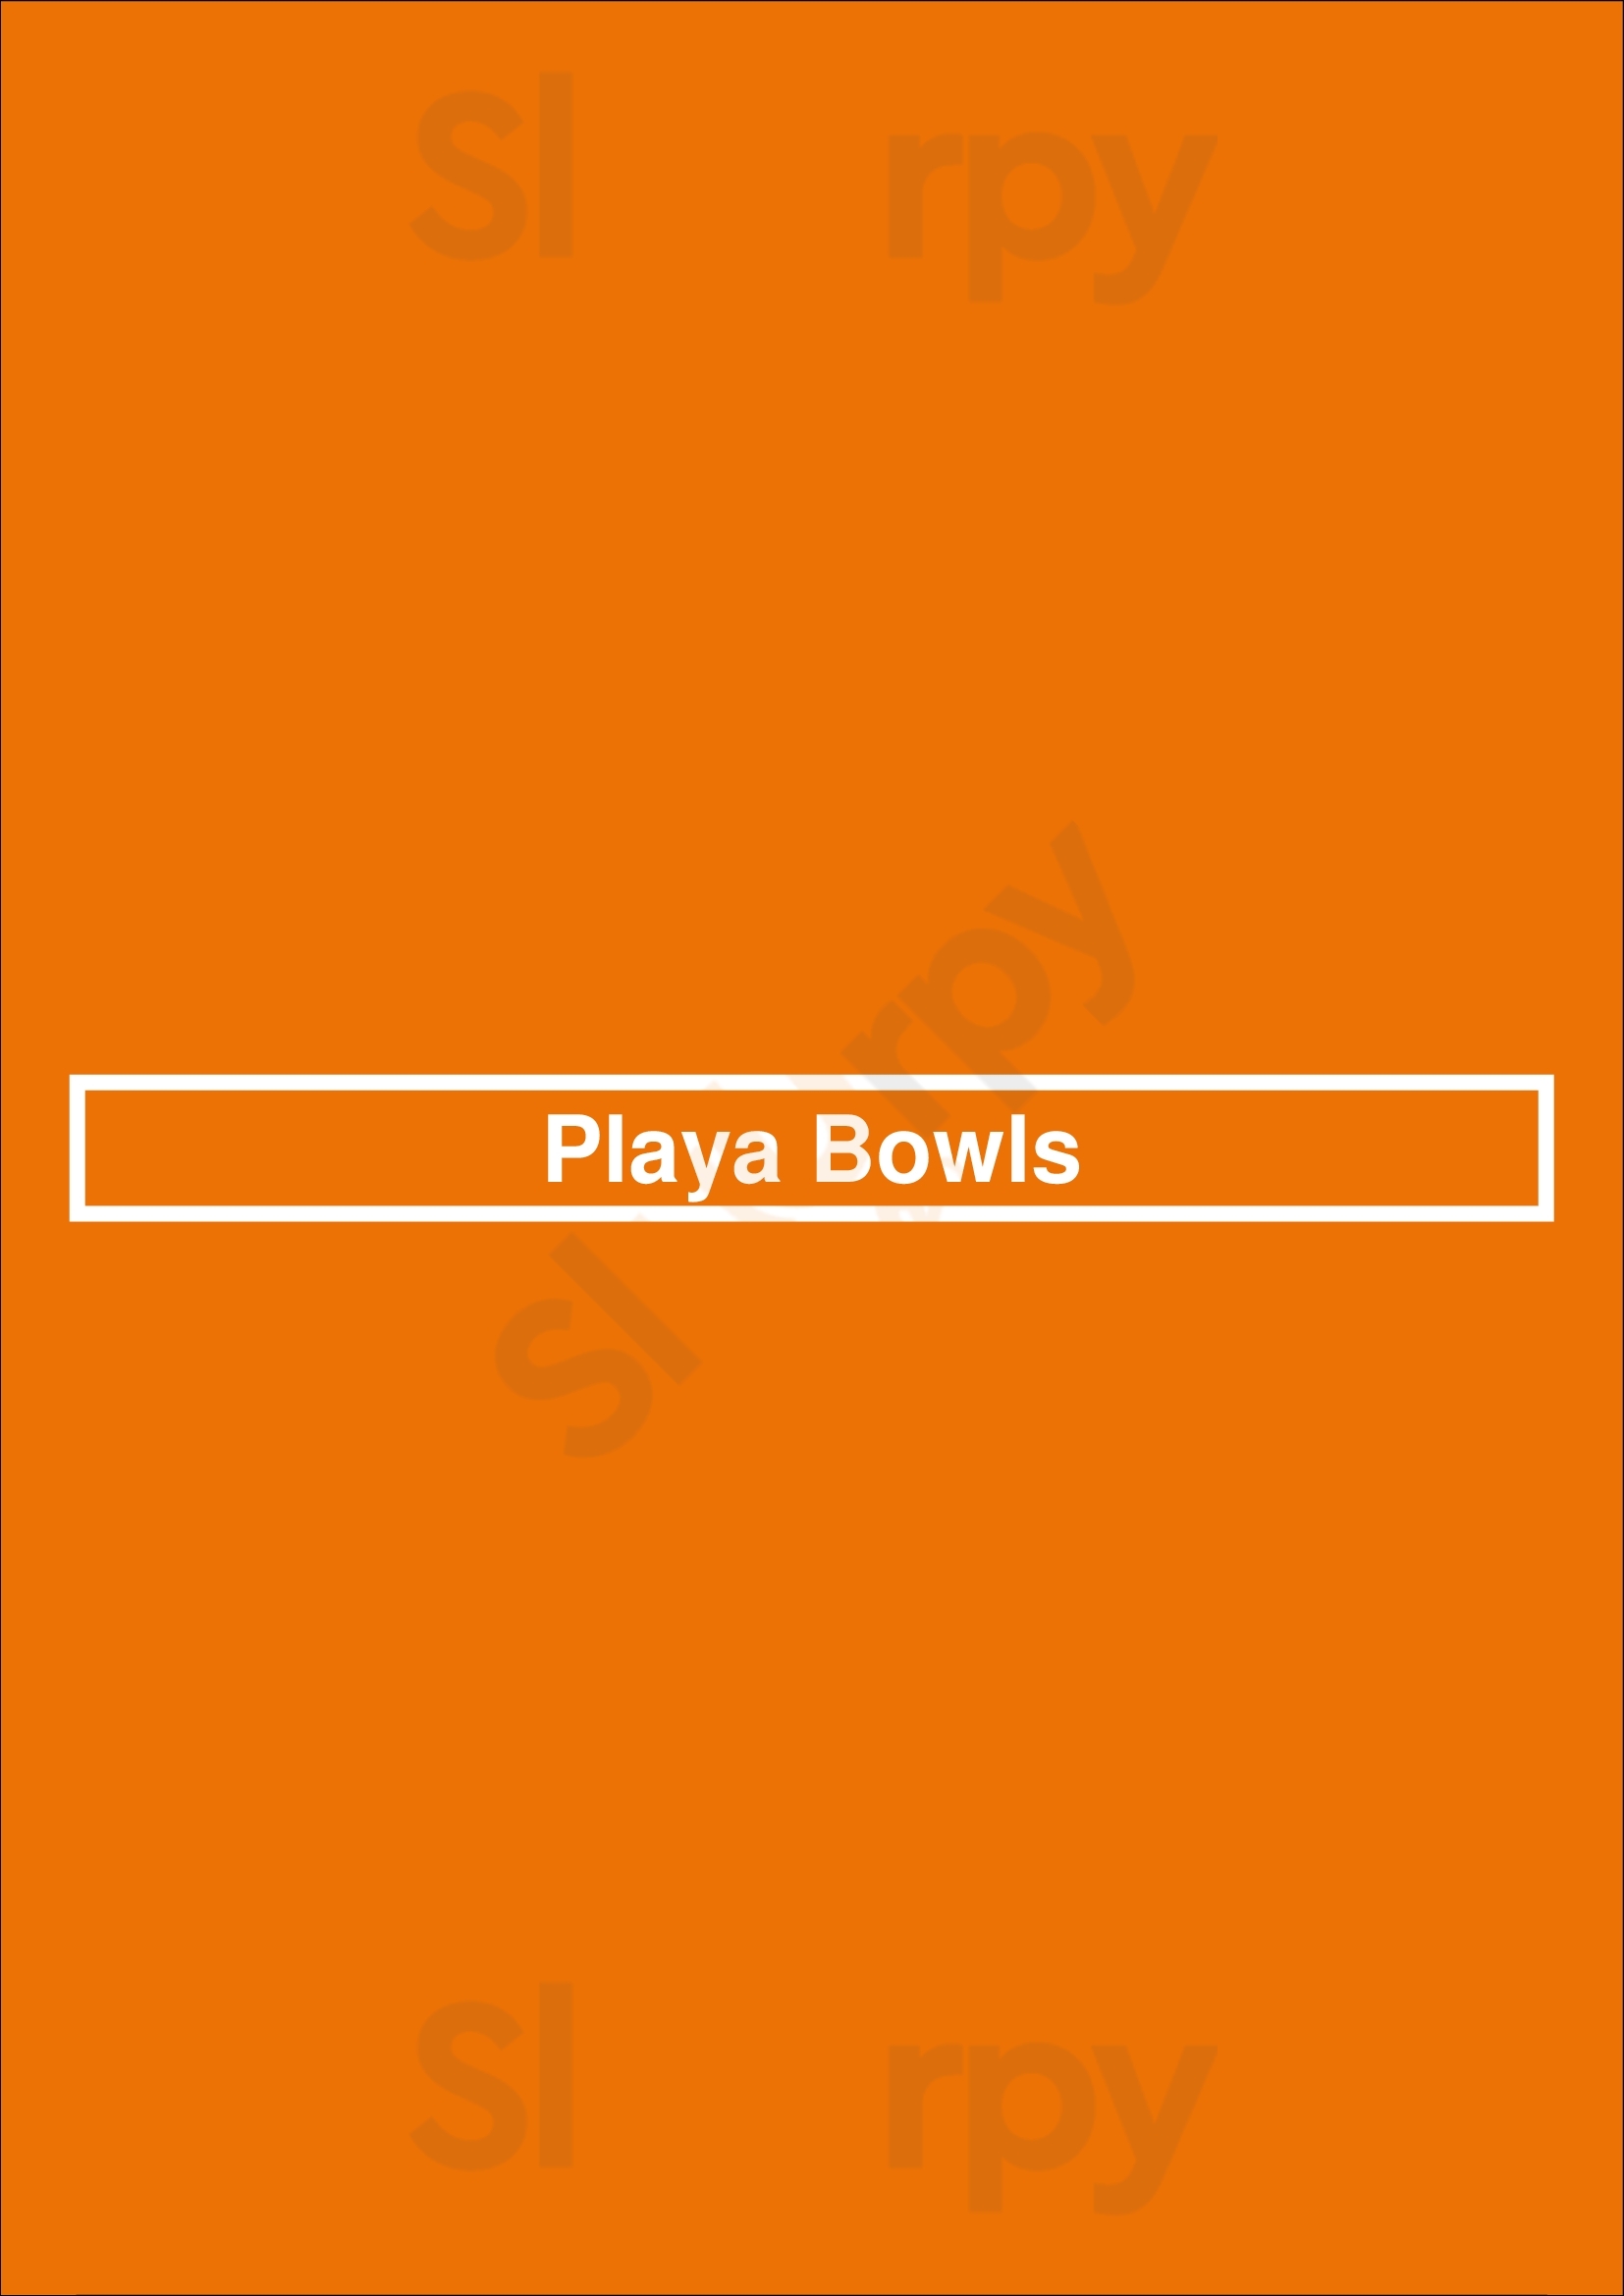 Playa Bowls New York City Menu - 1